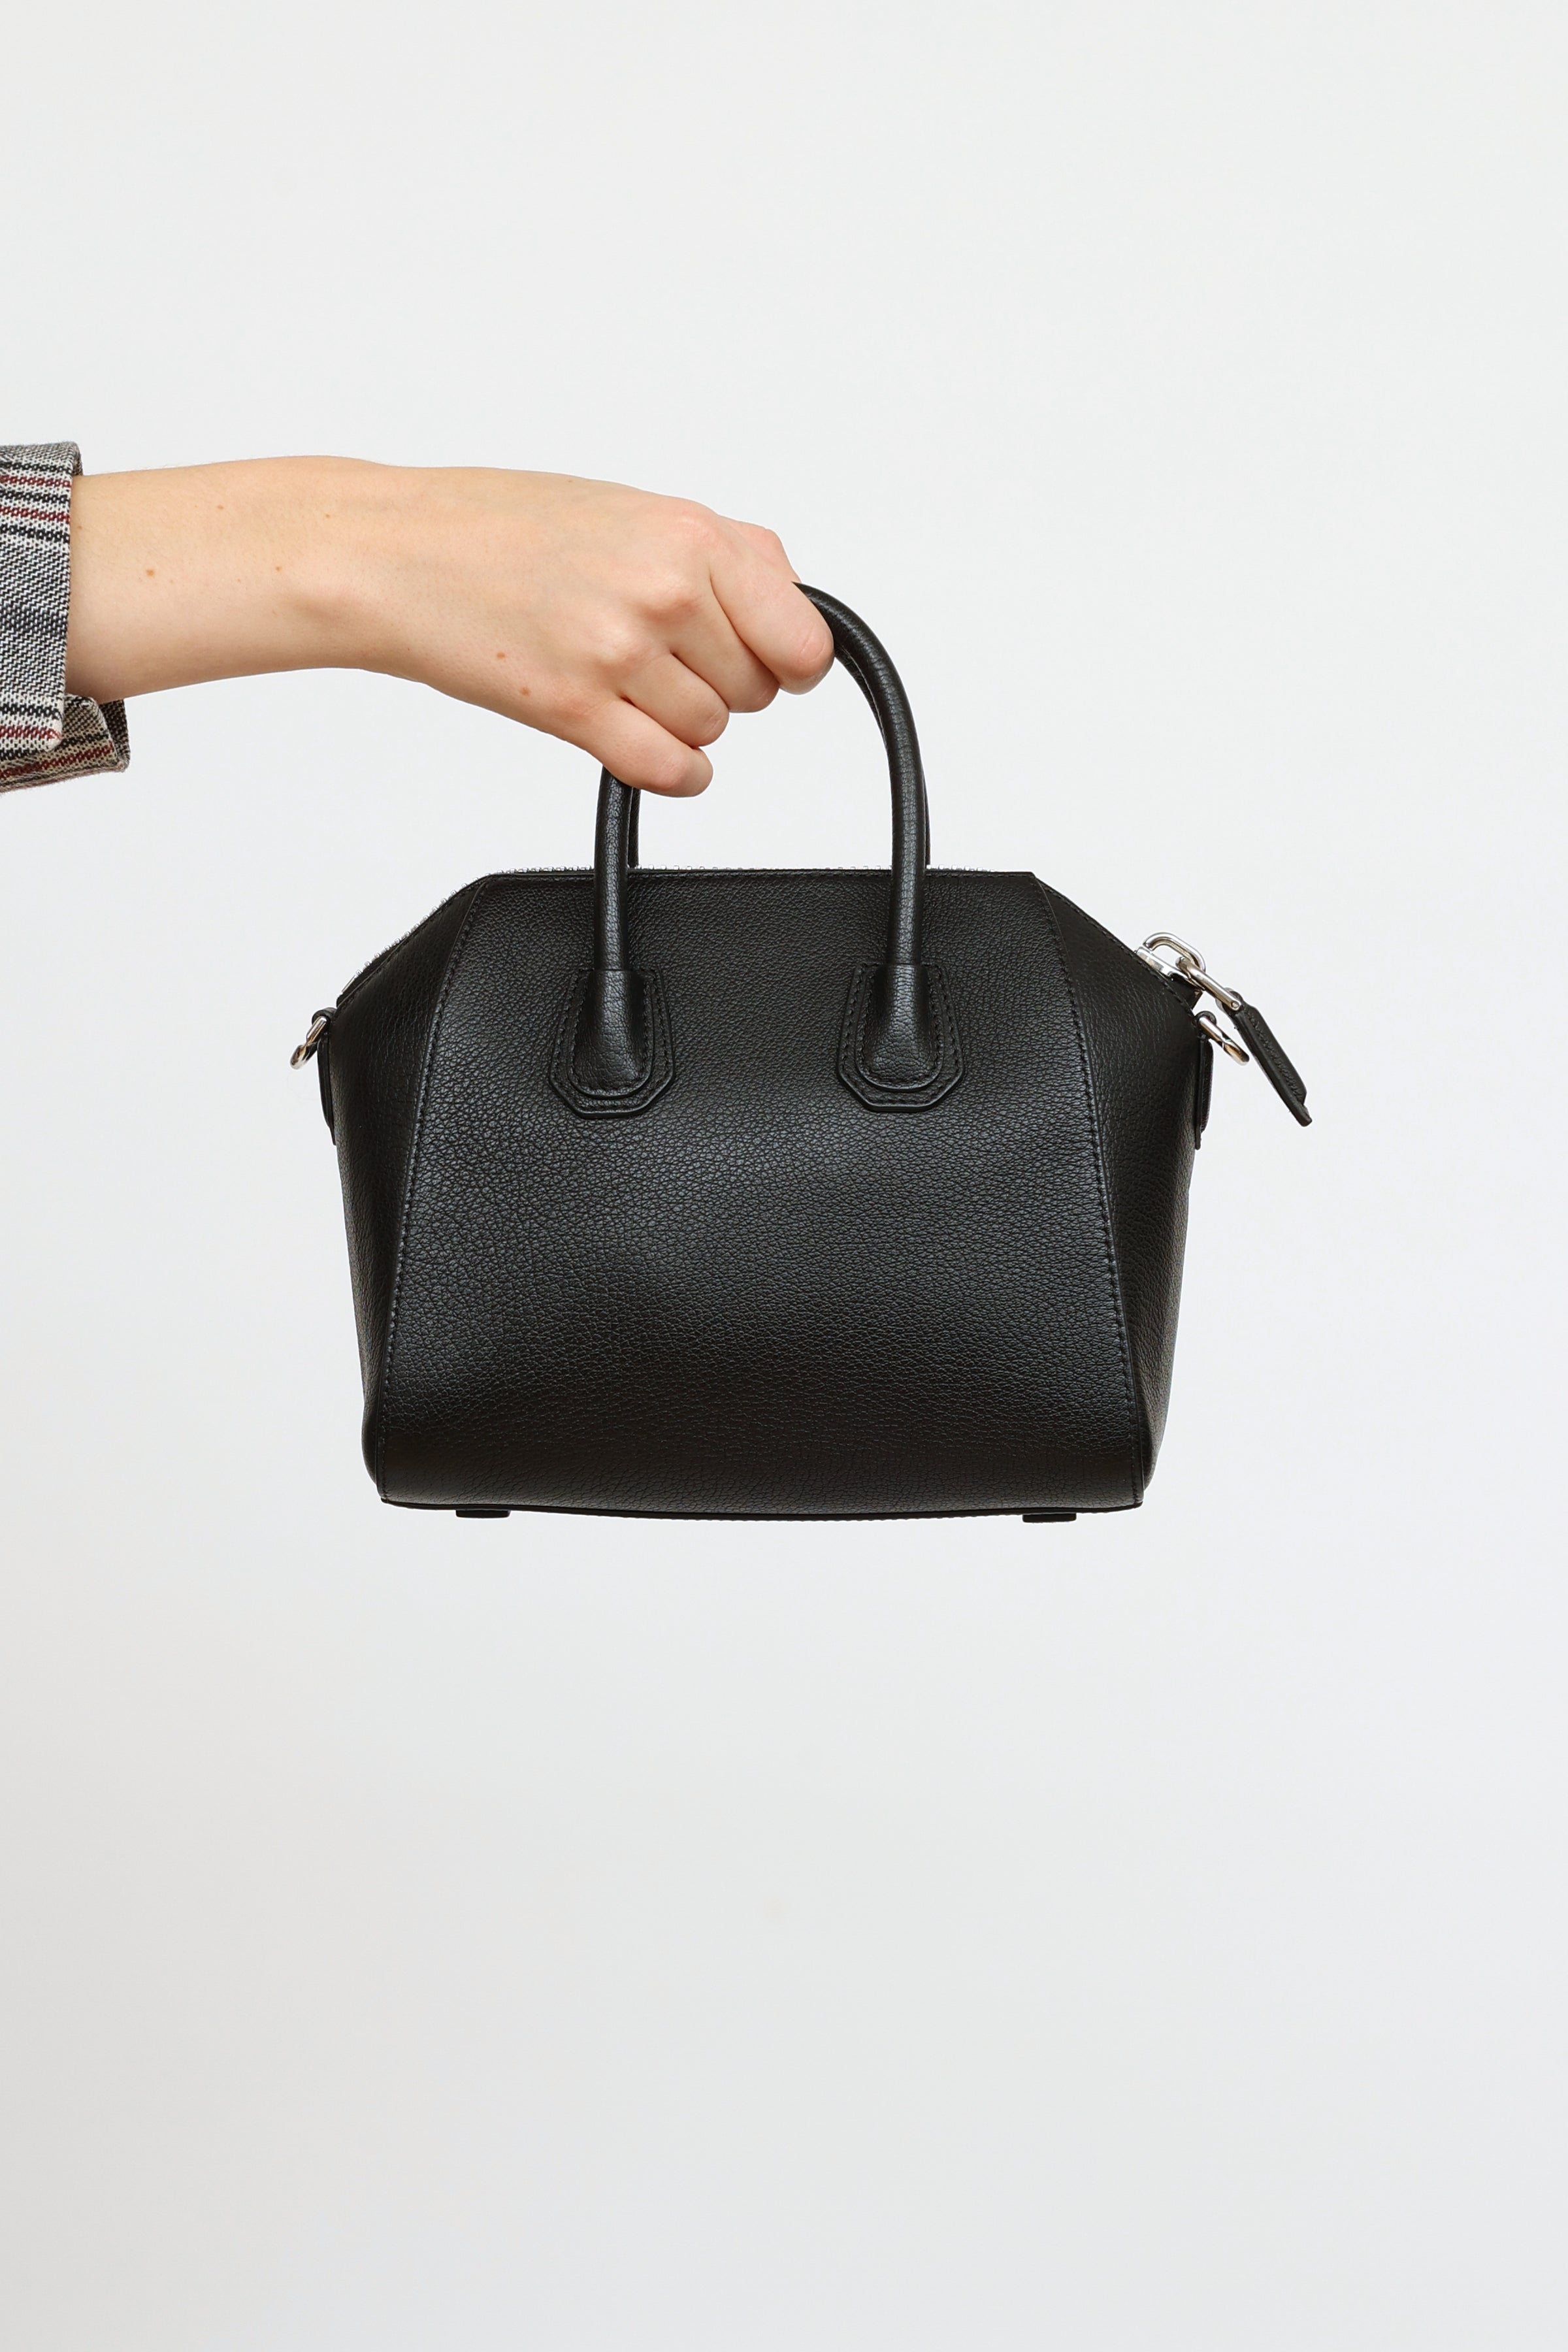 Givenchy Shoulder Bag Antigona Small Goatskin Leather